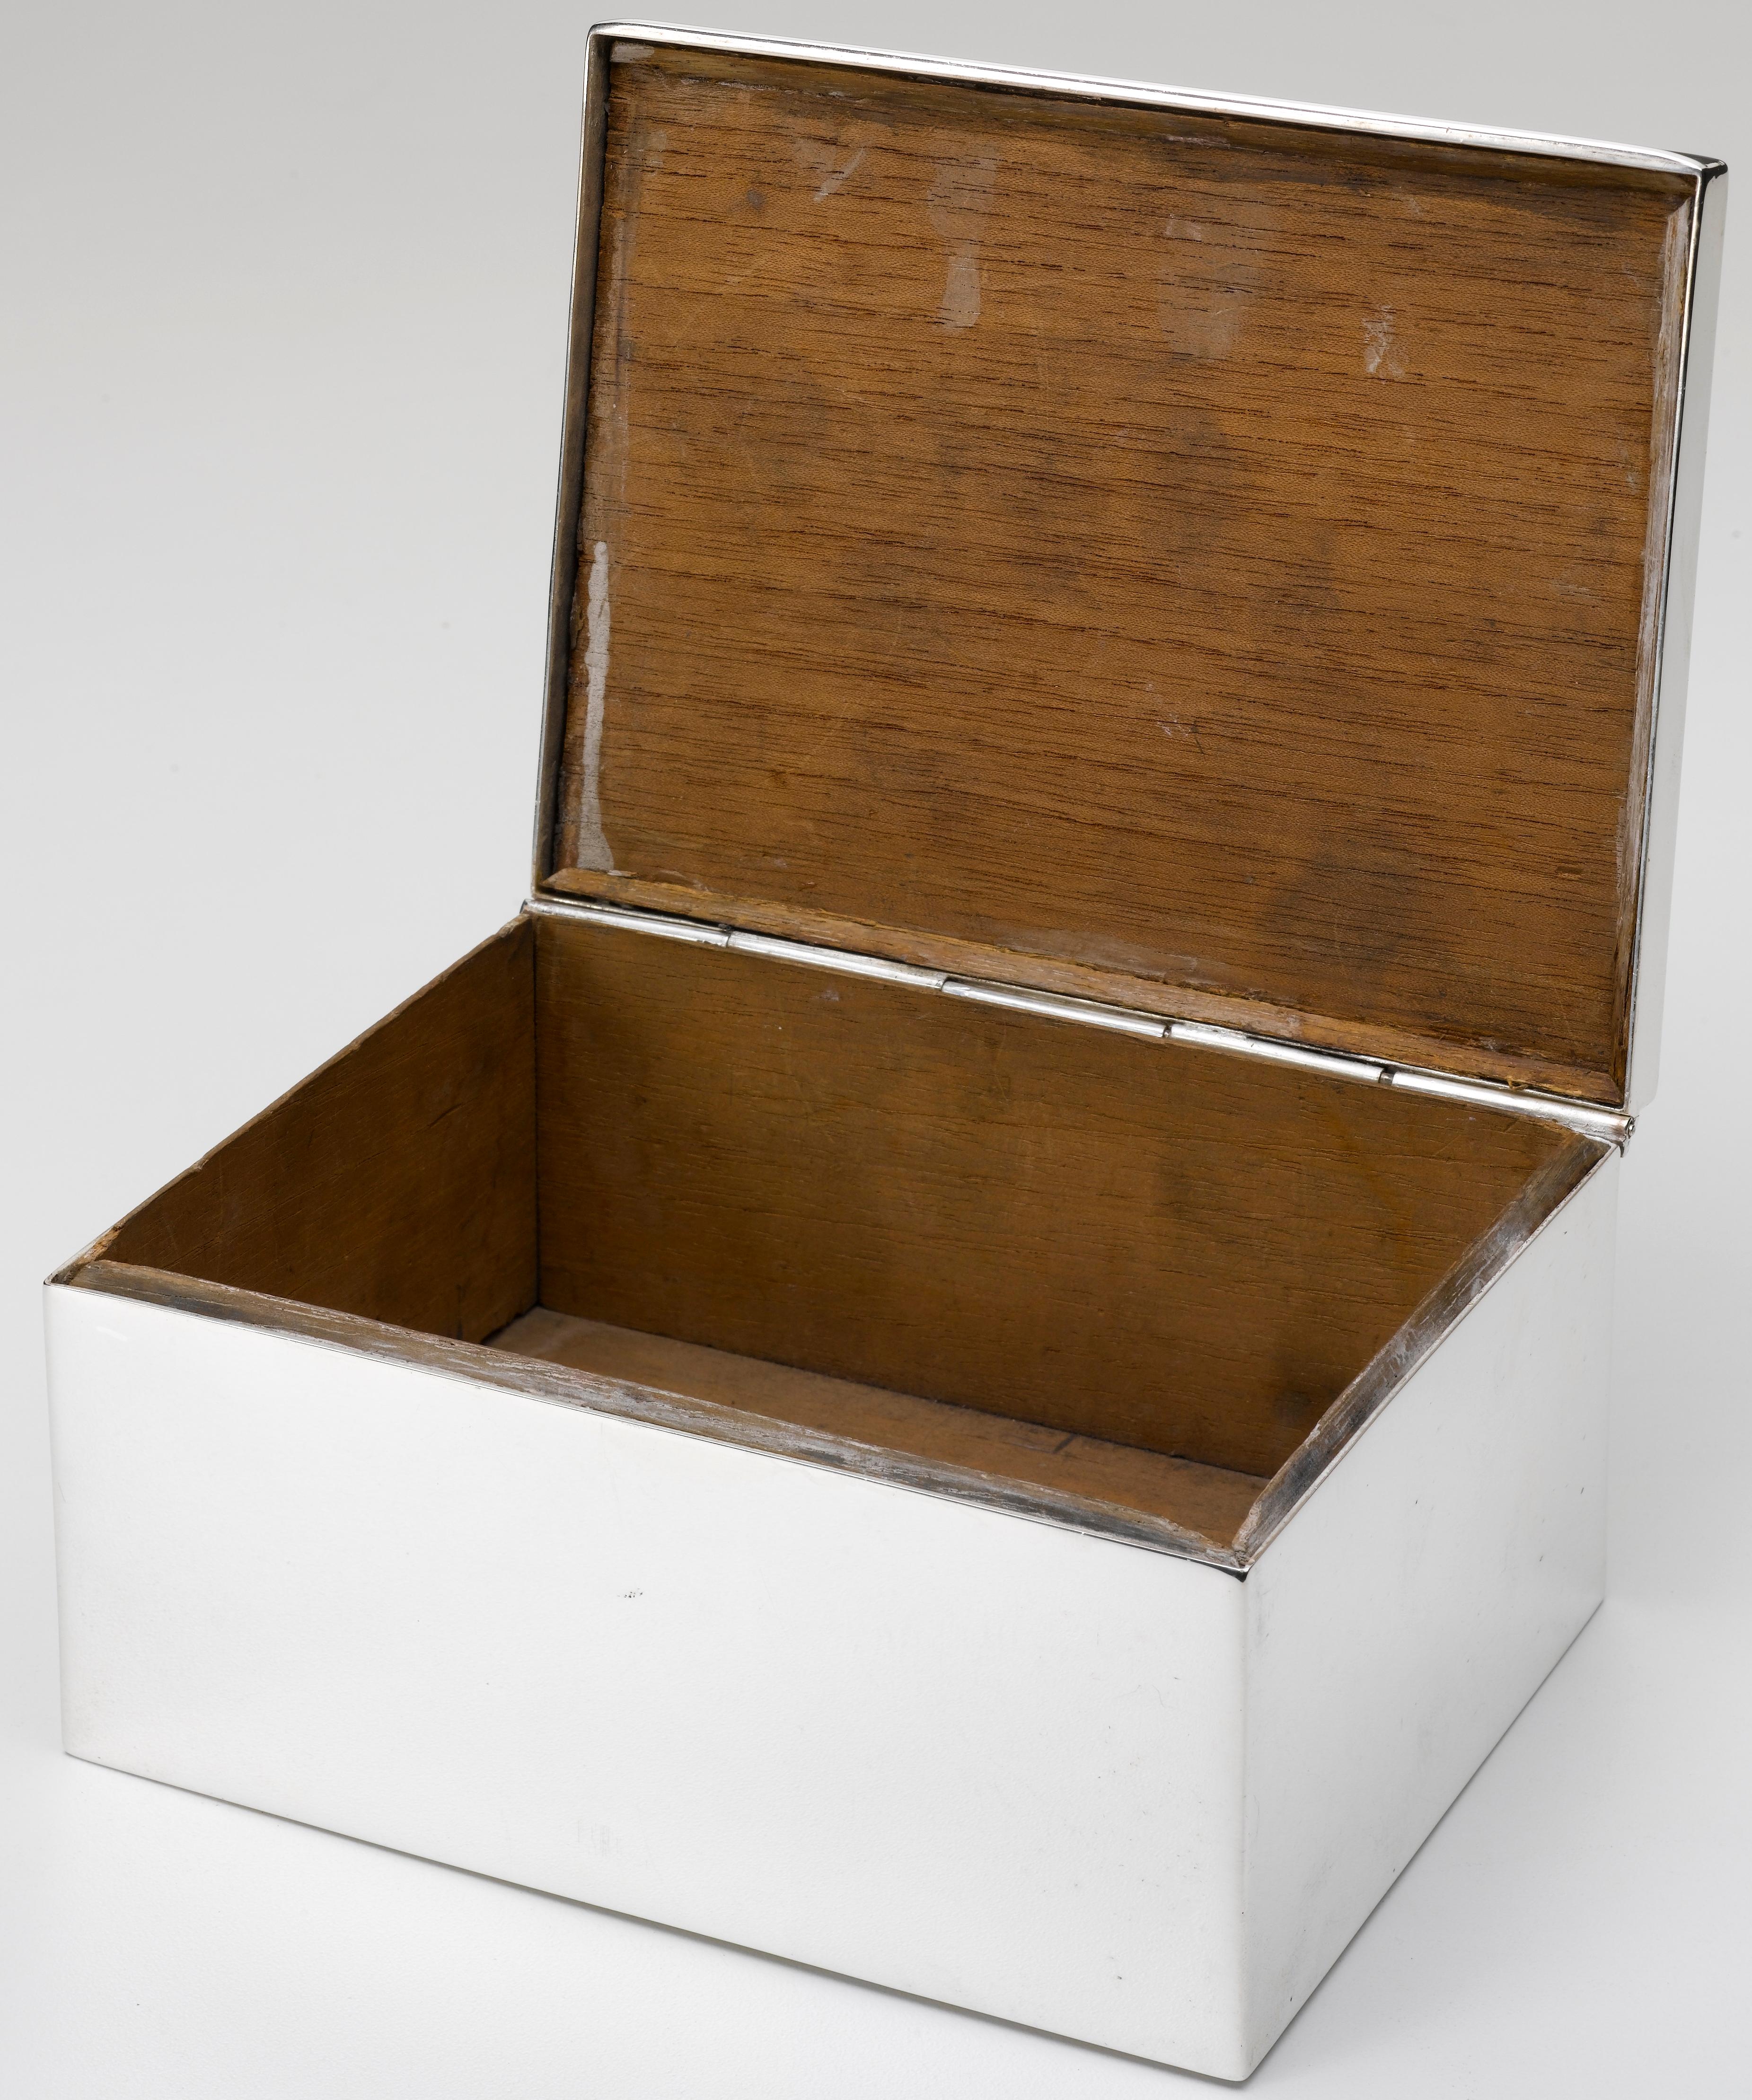 British Silver Plated Keepsake Box, Sheffield, Uk, circa 1900